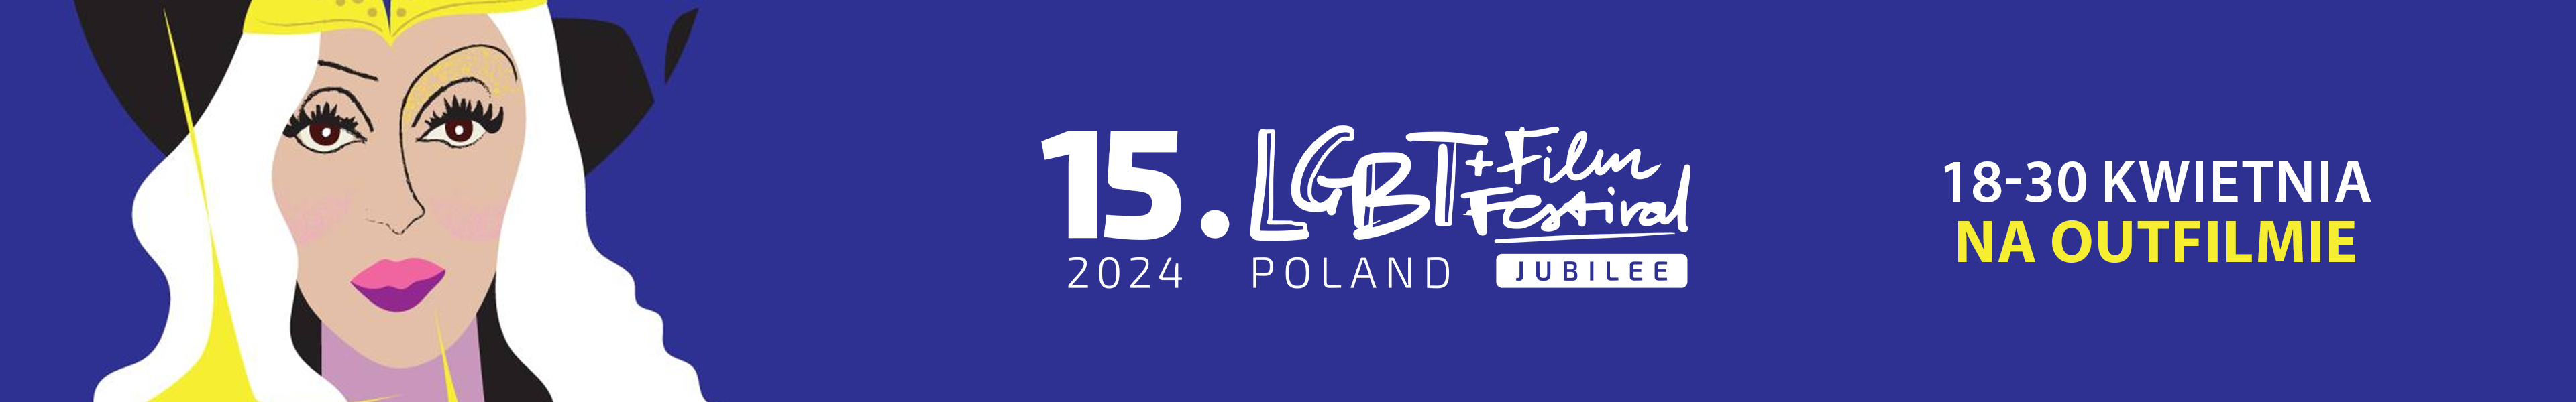 15. LGBT+ Film Festival na Outfilmie